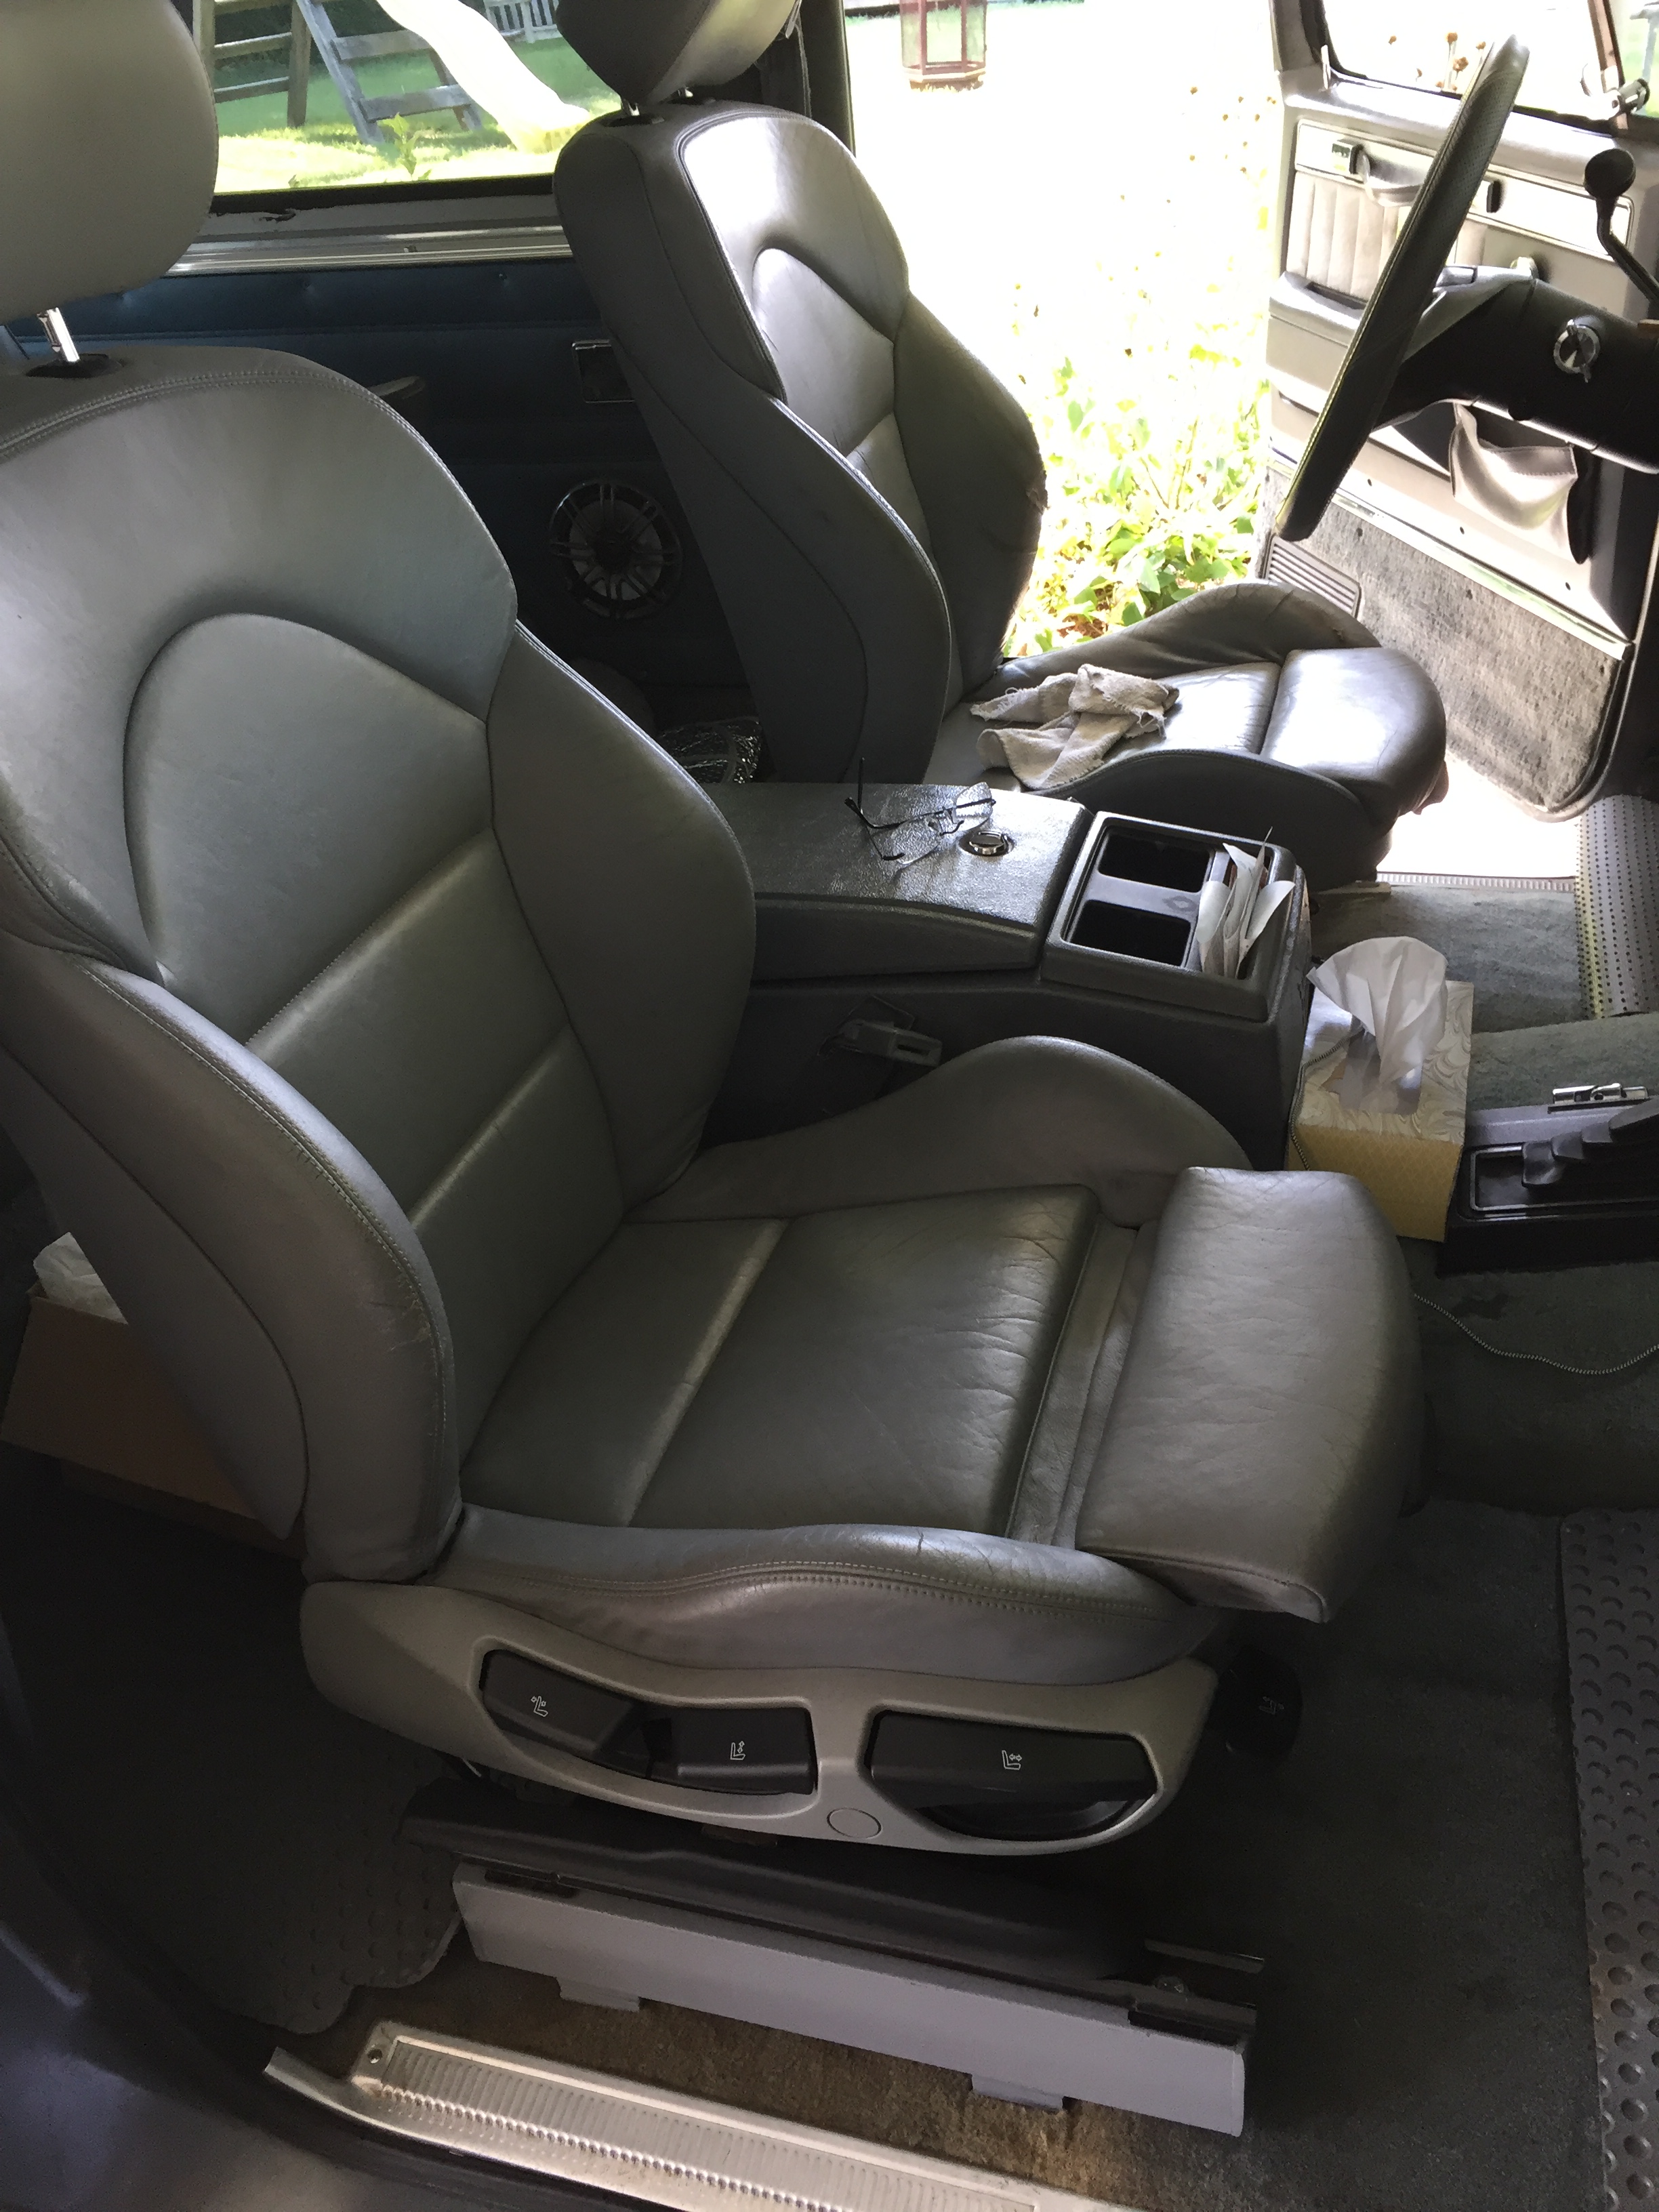 Installing BMW E46 M3 Seats in K5 Blazer